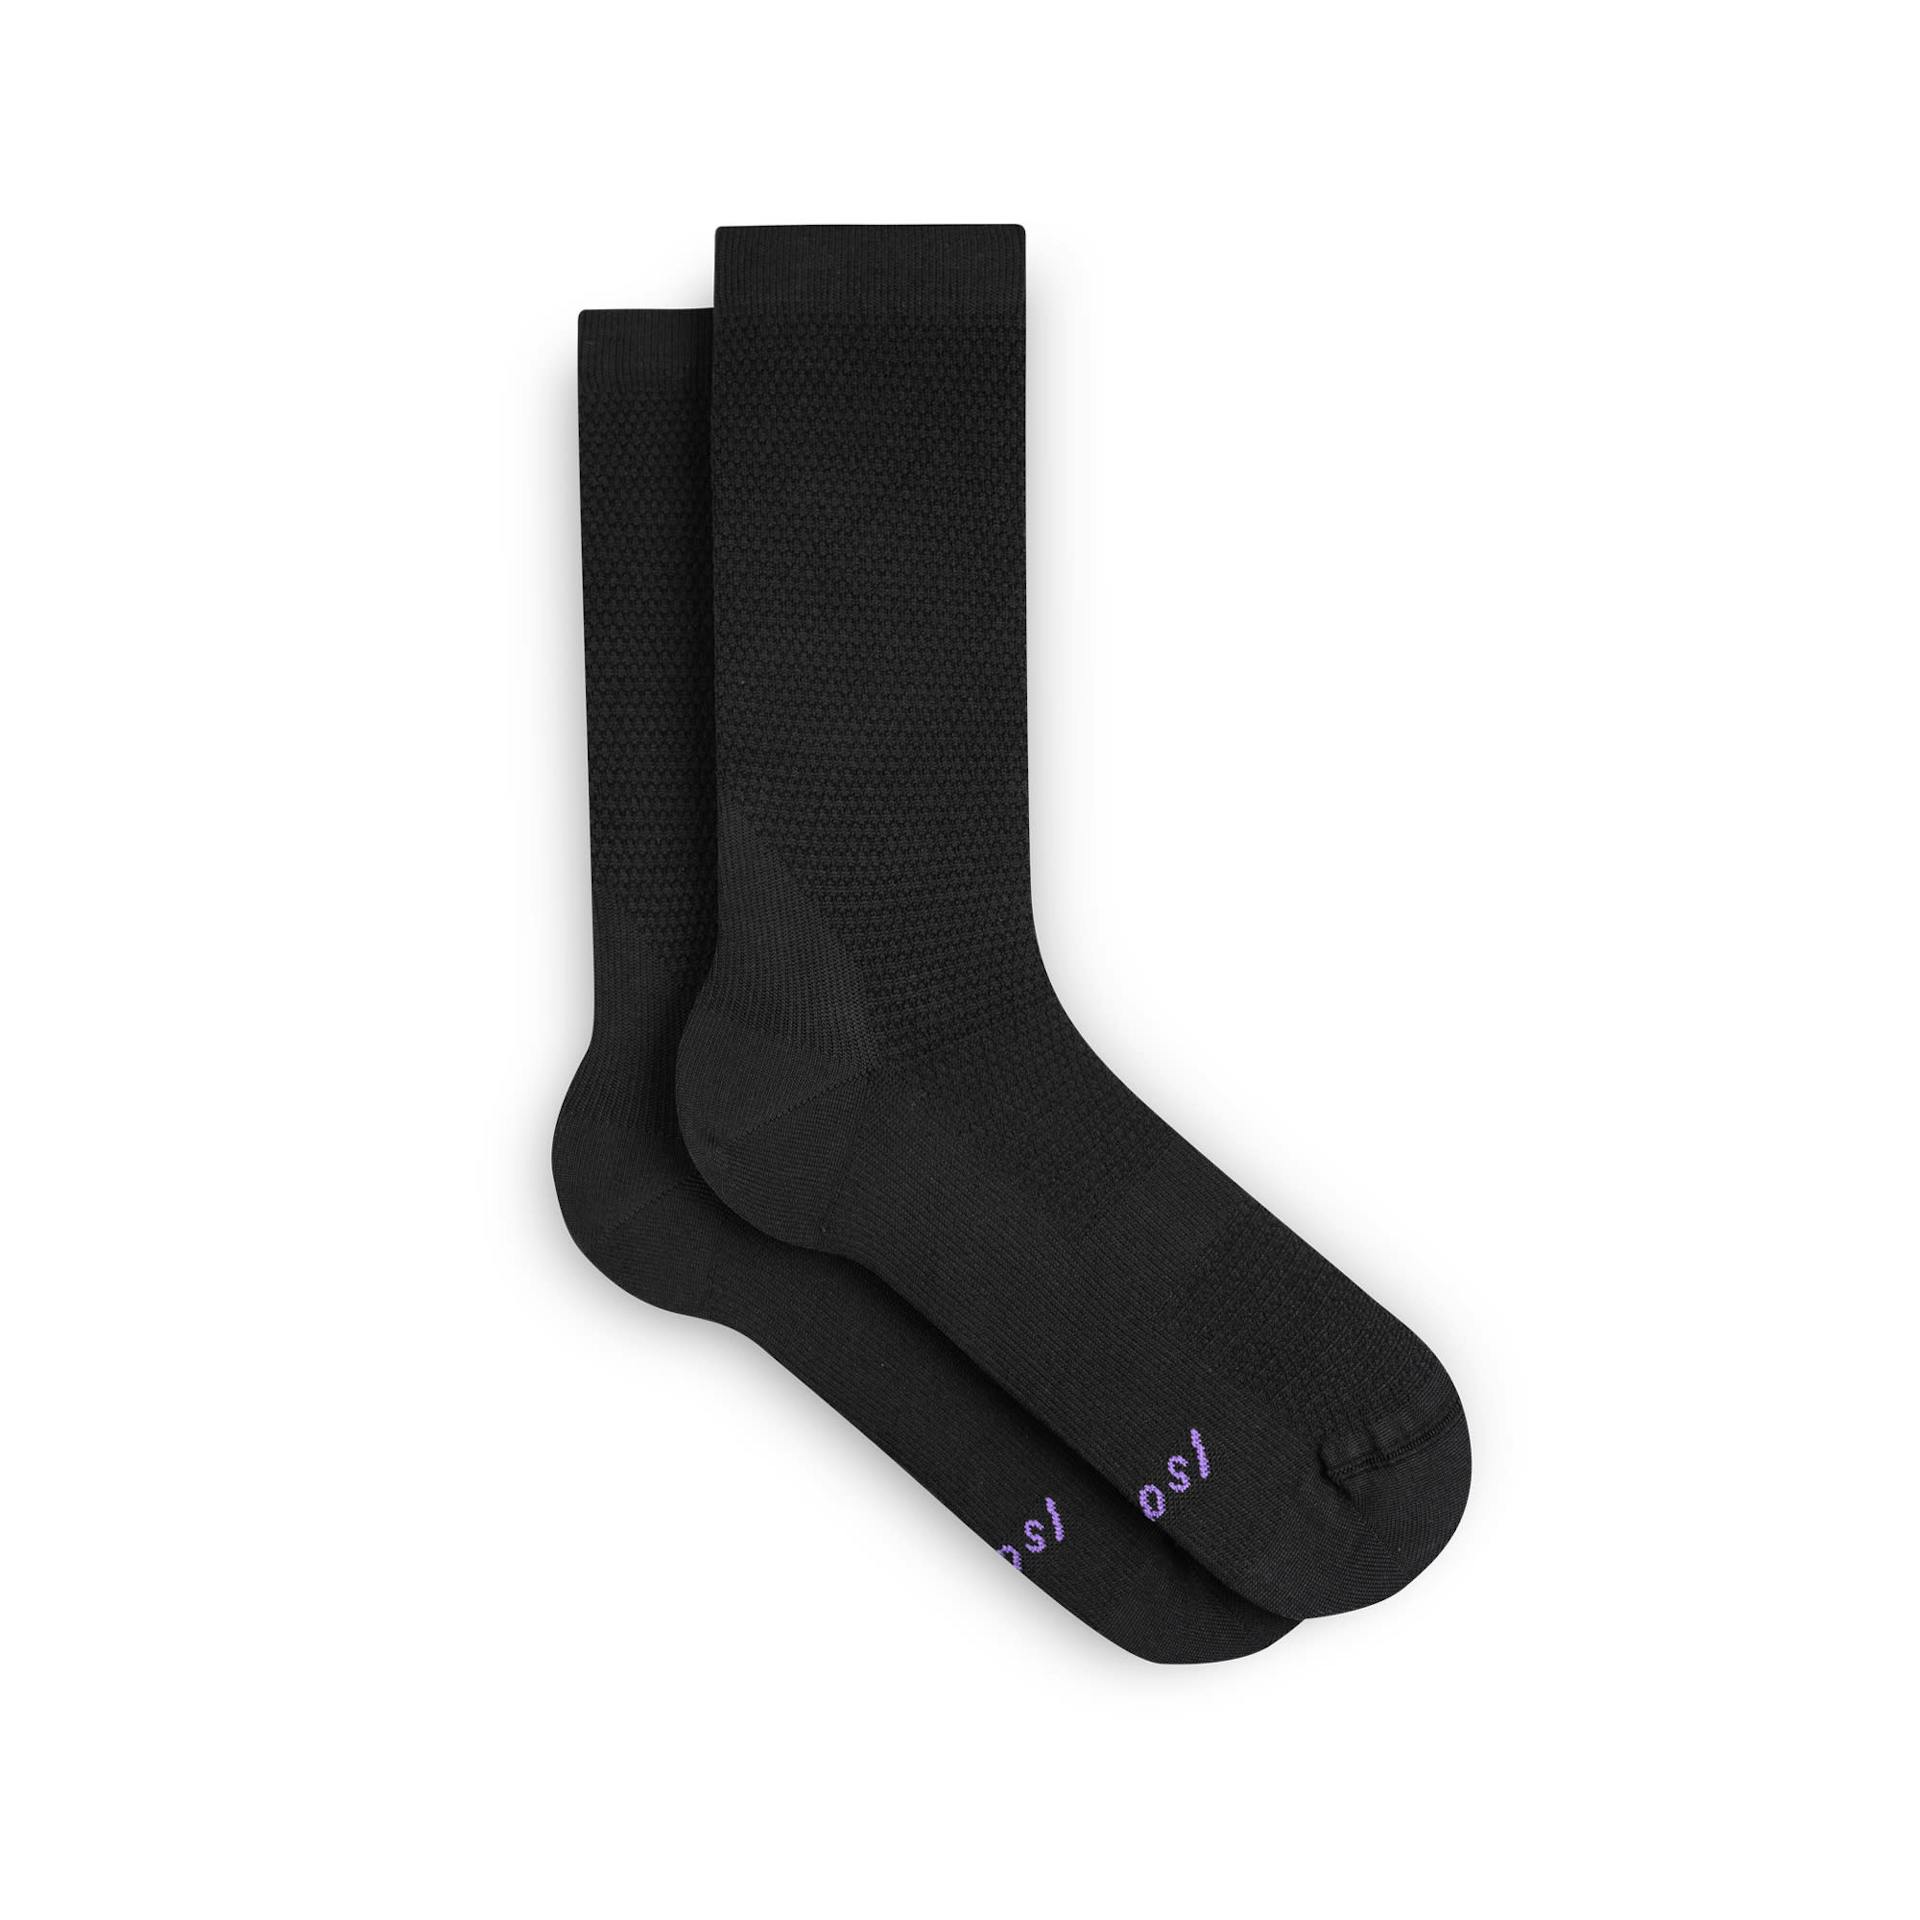 Echelon Socks - Black
                        